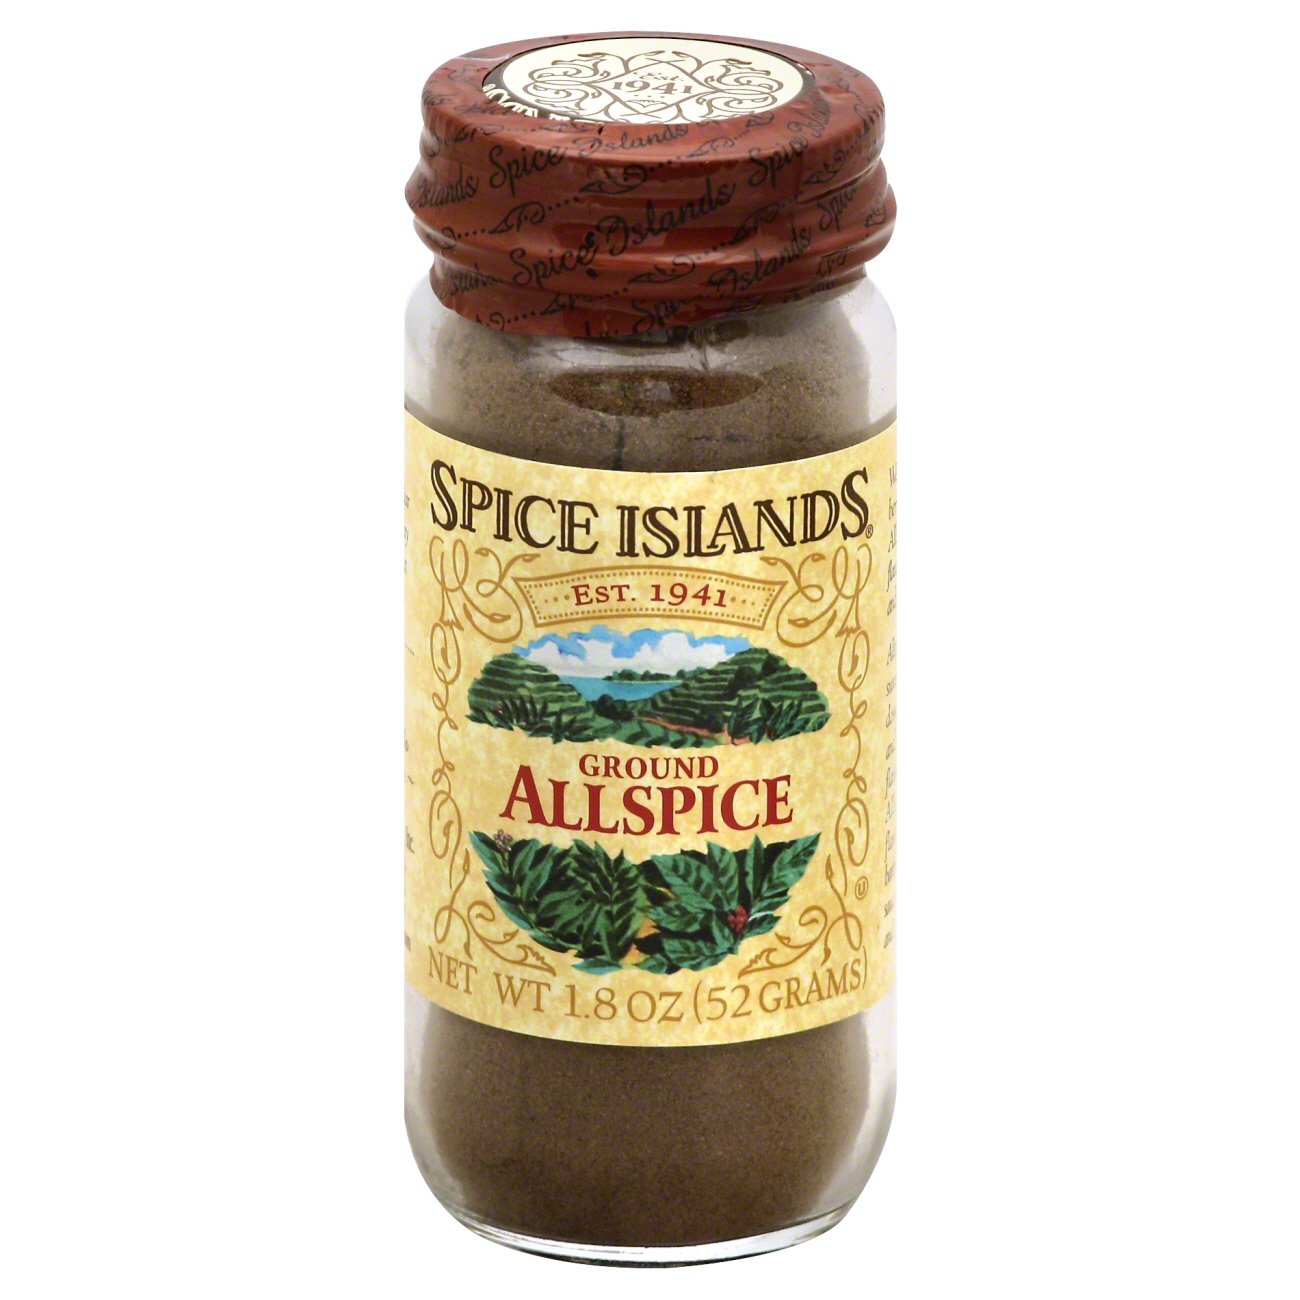 Ground Allspice - Emporium Packaging & Spice Co.